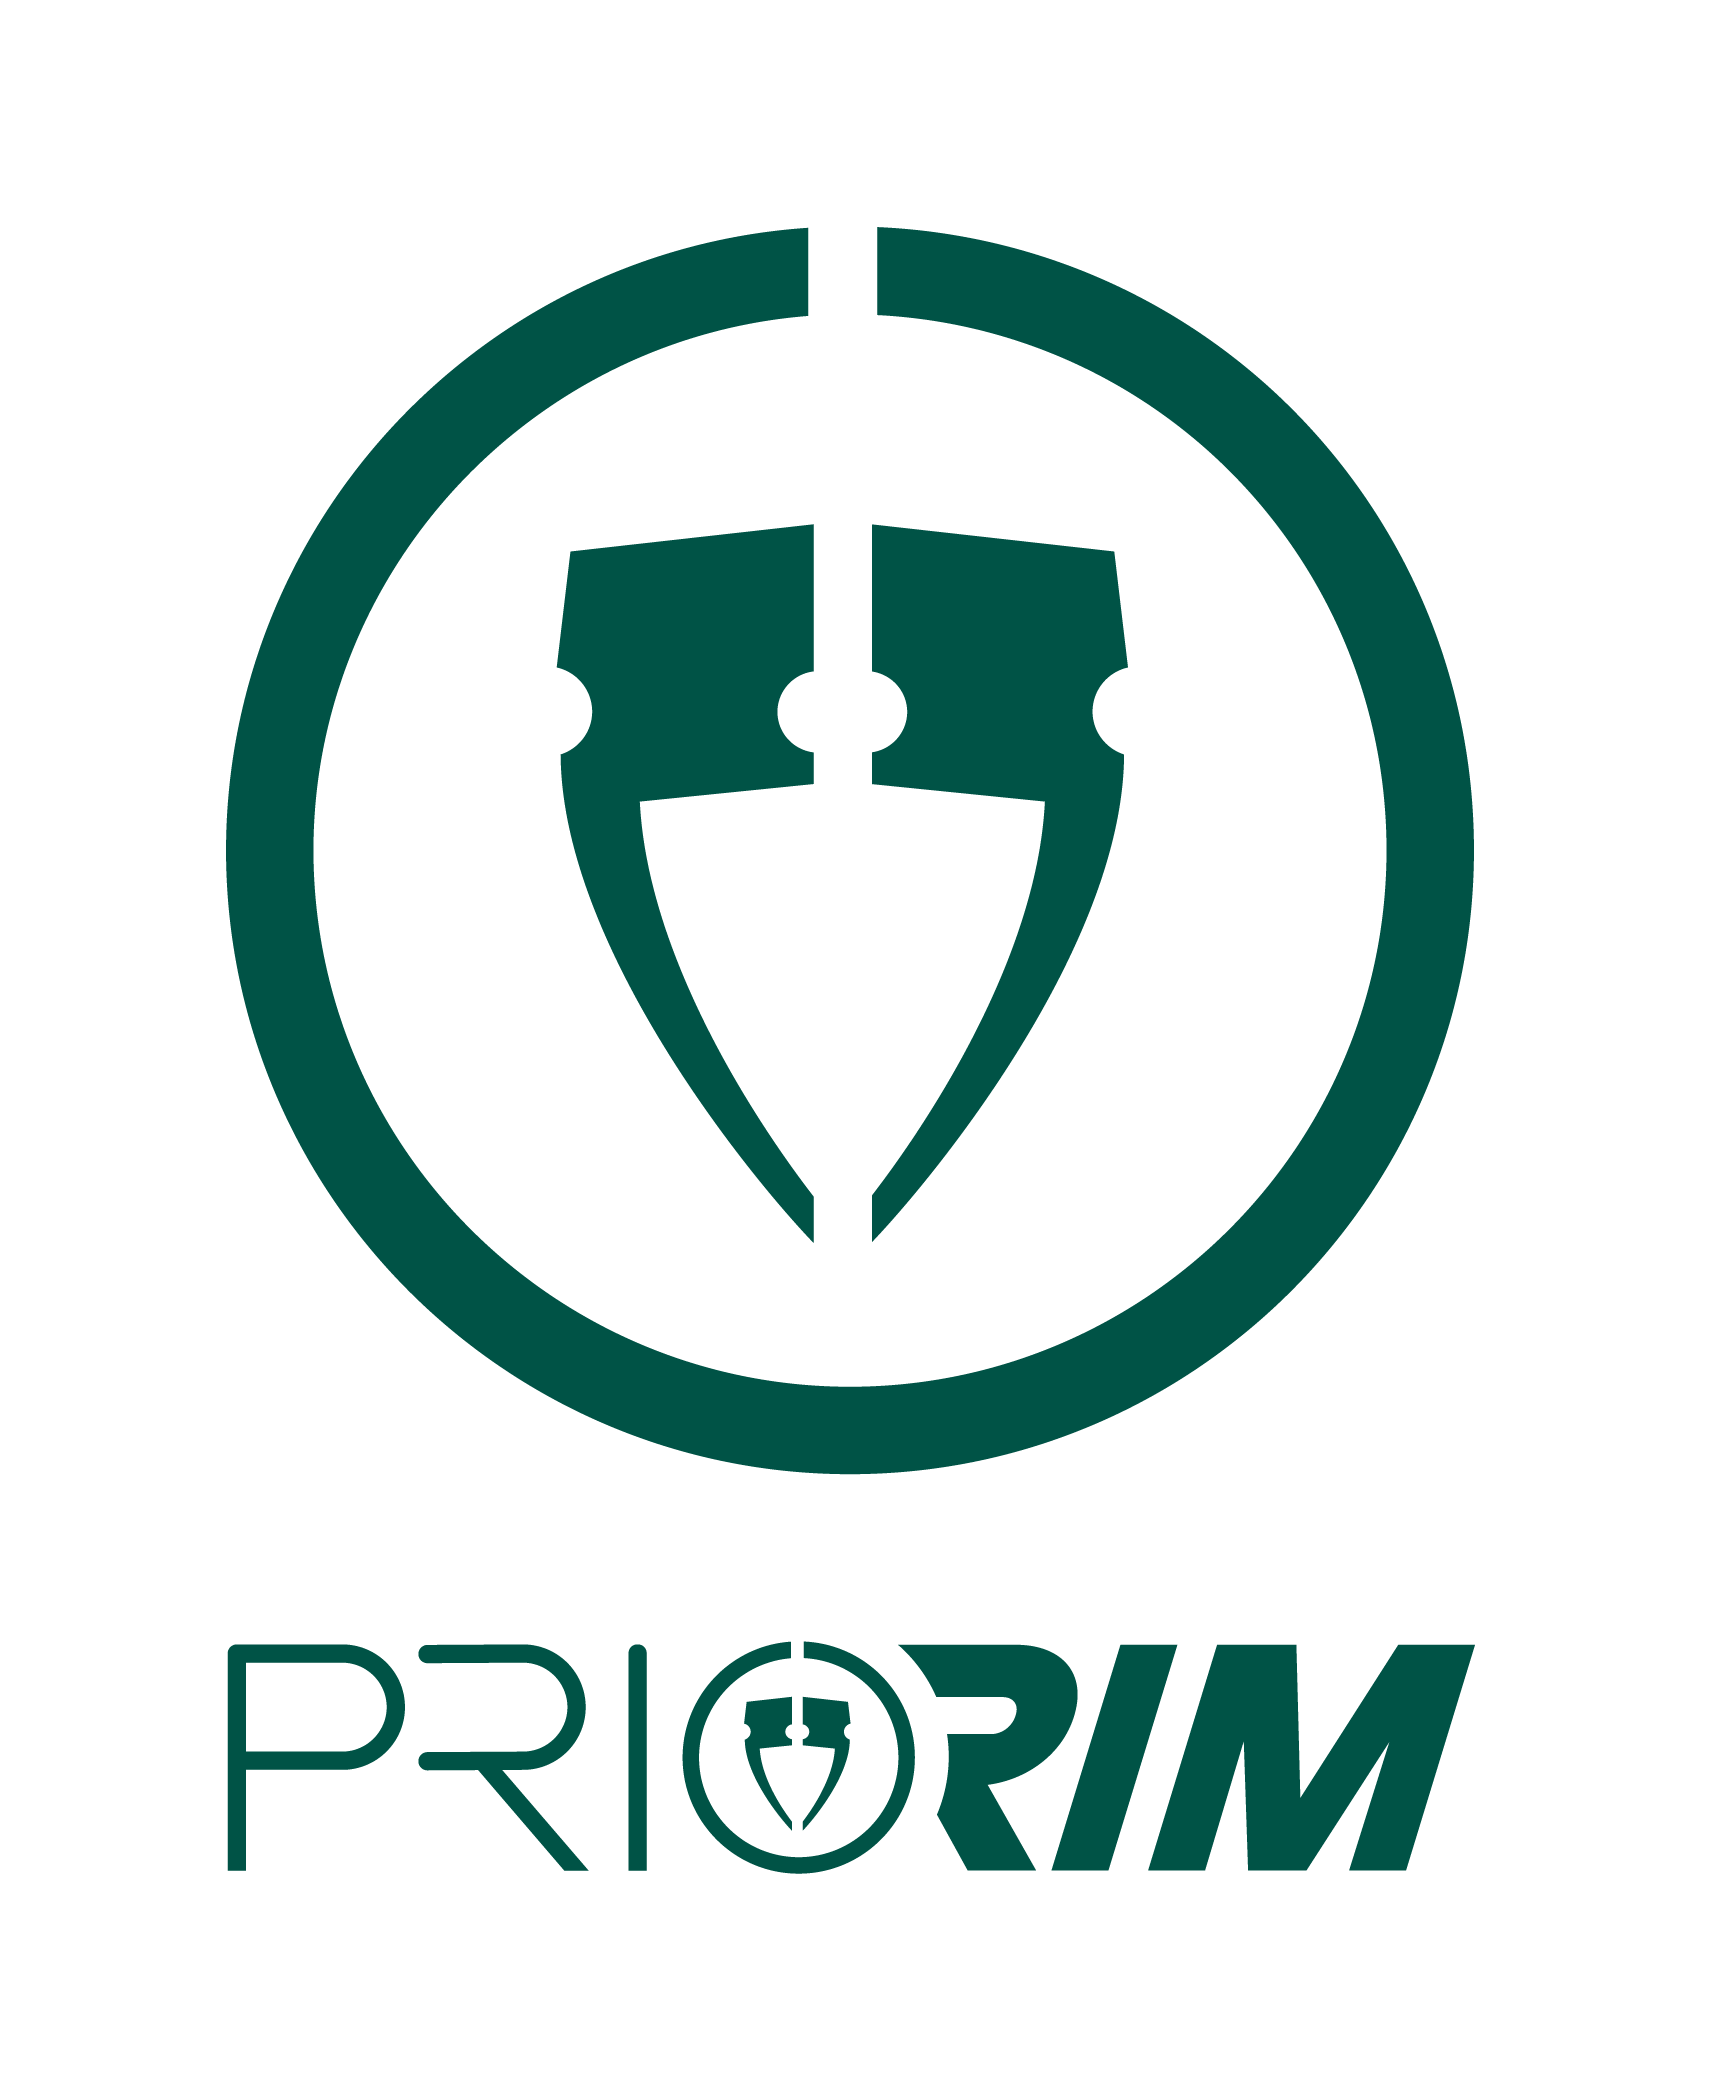 PrioRim Rim Protector White  Sleek Look, High-Quality Protection